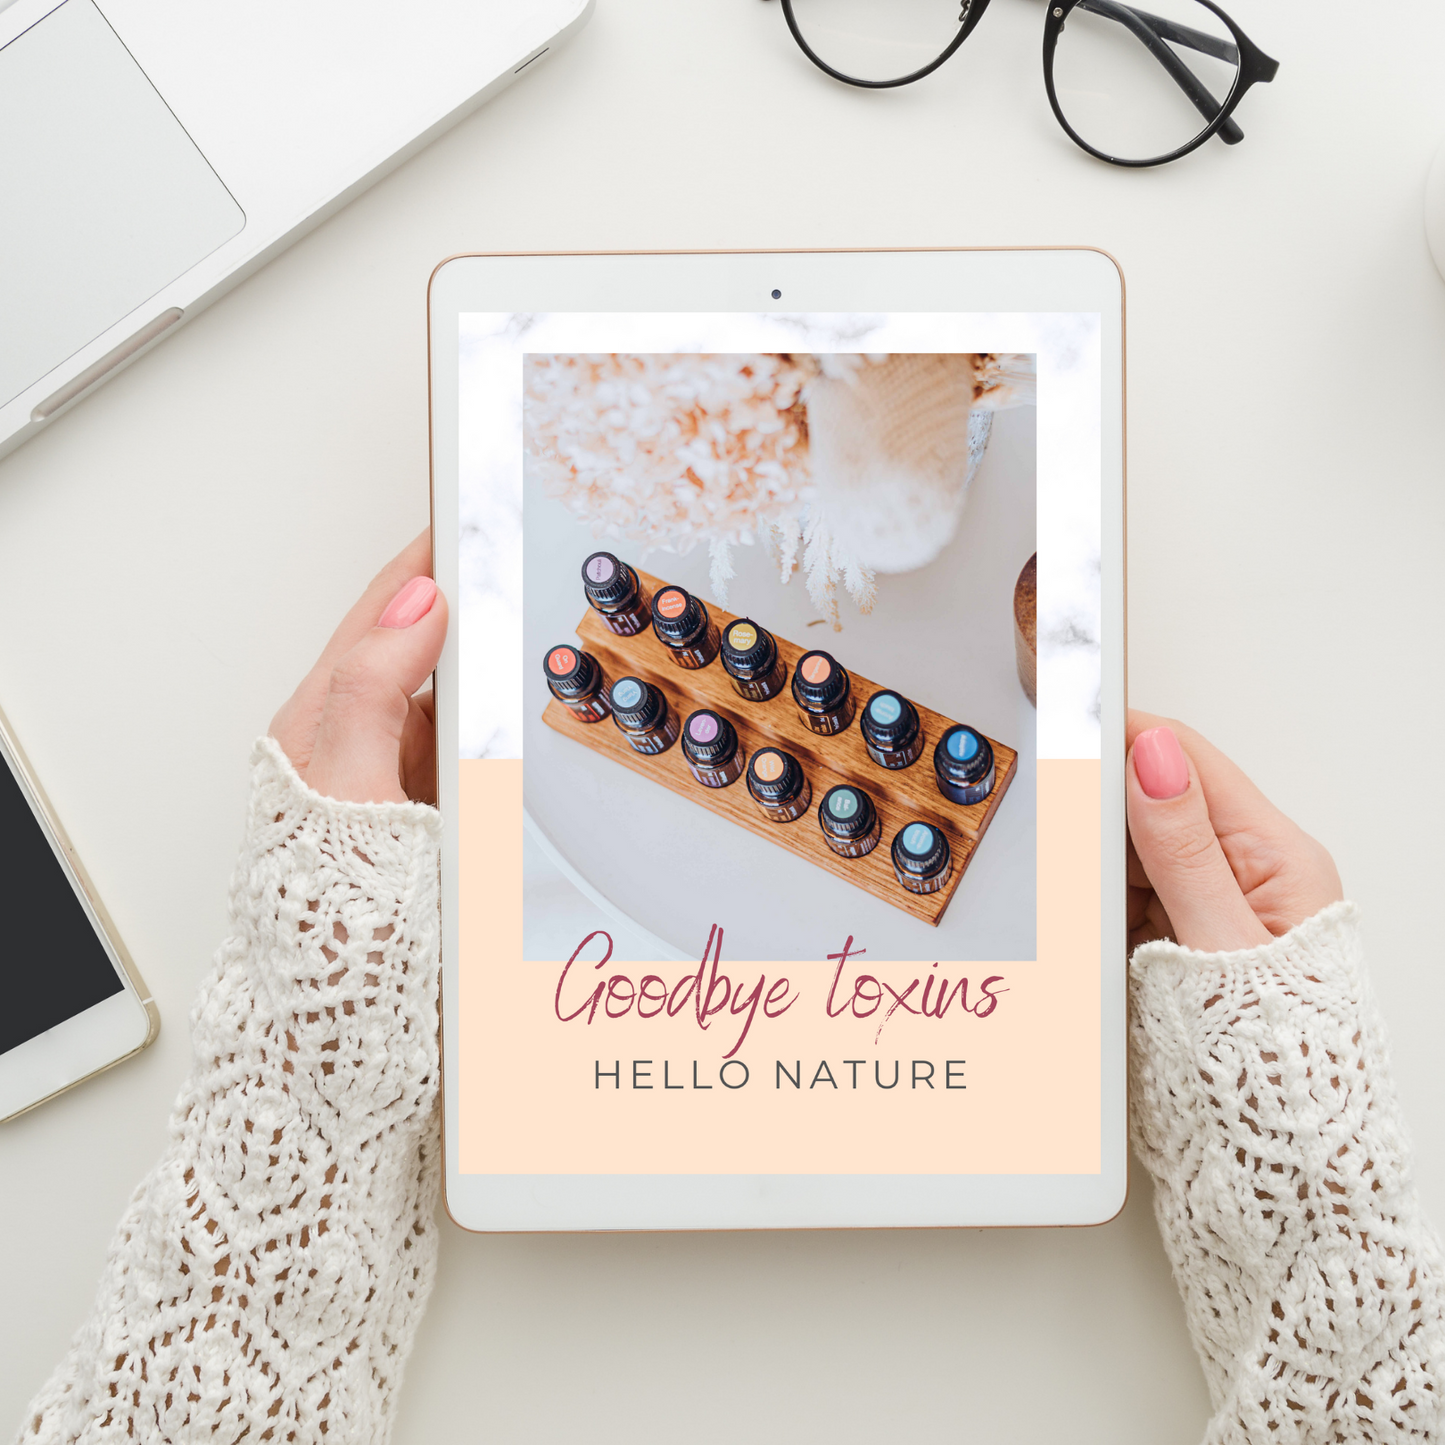 Goodbye Toxins, Hello Nature - Essential Oils eBook